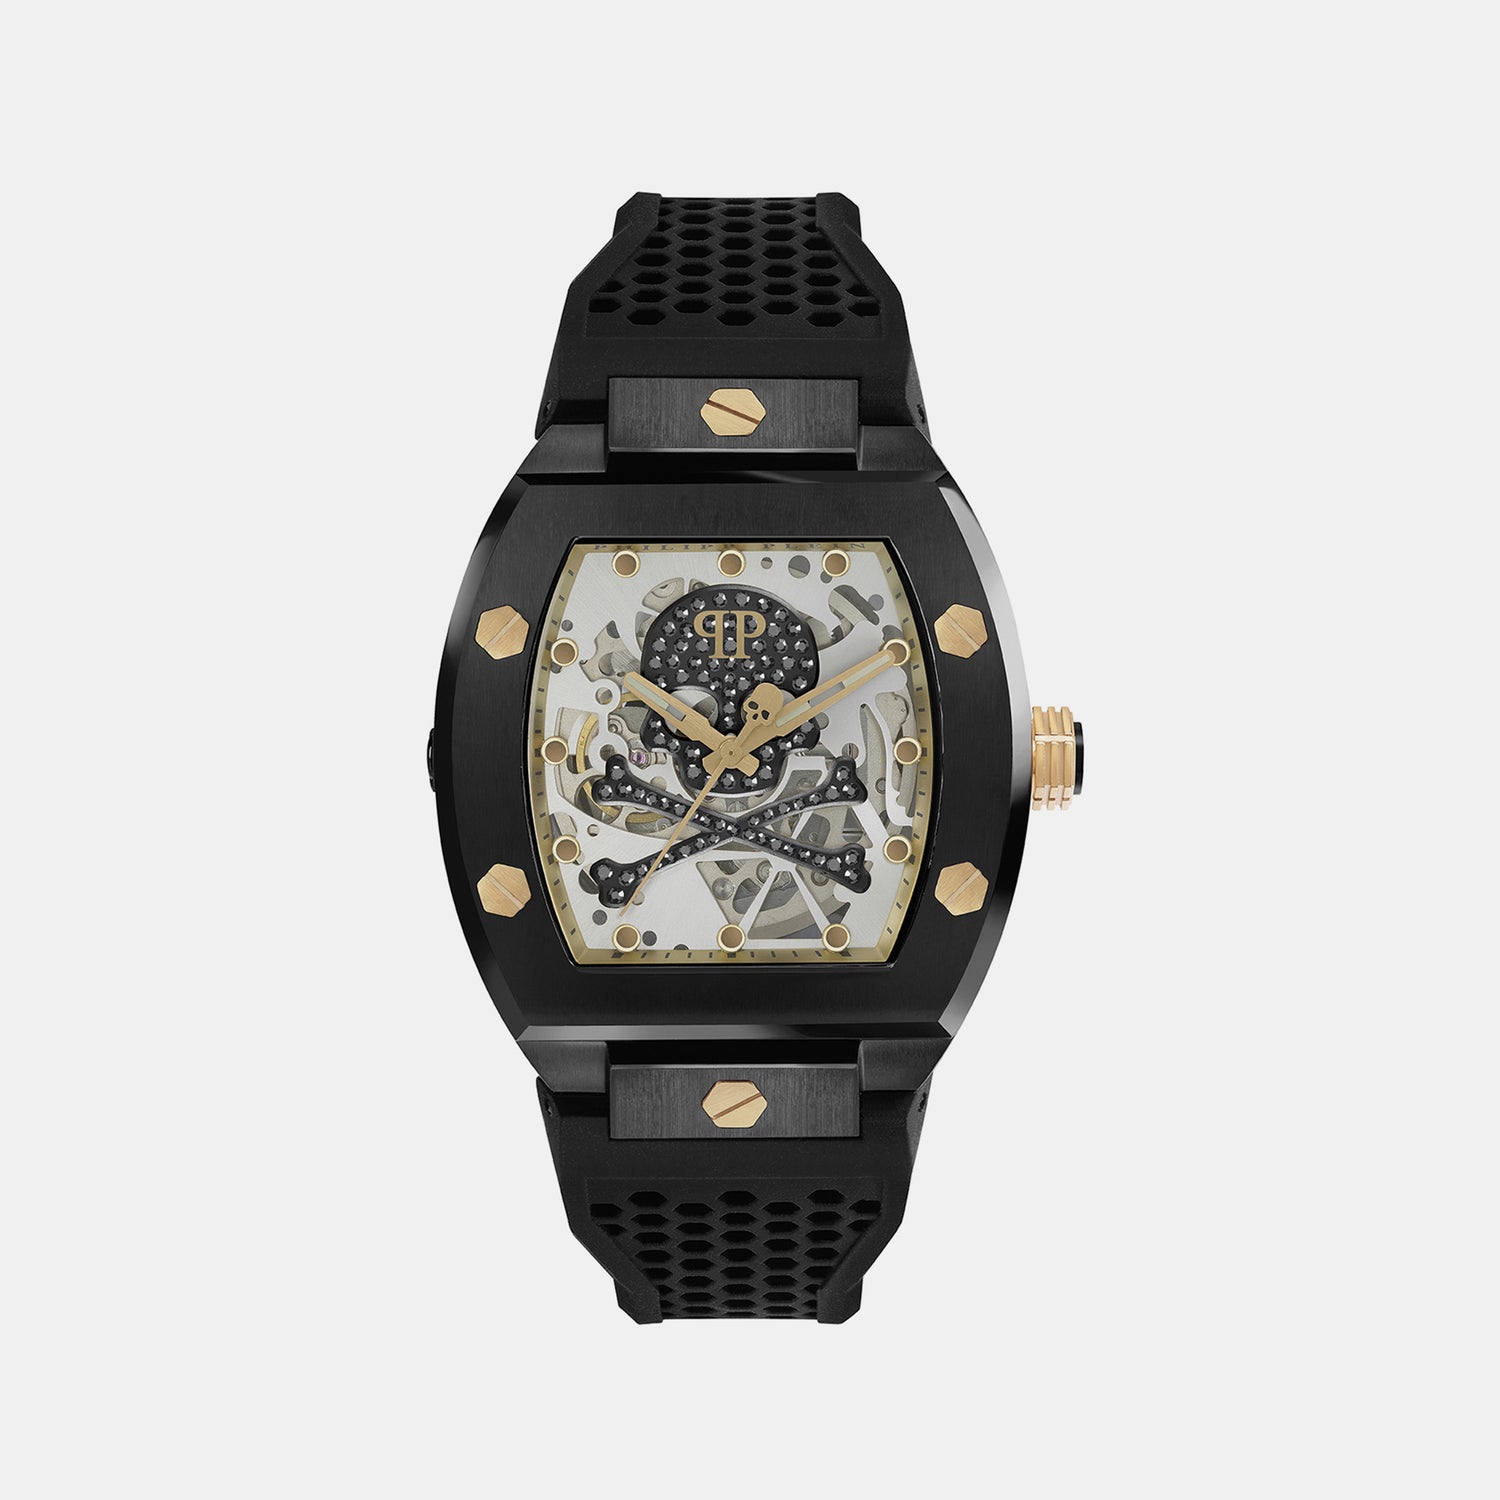 The $Keleton Male GREY Automatic Silicon Watch PWBAA0521